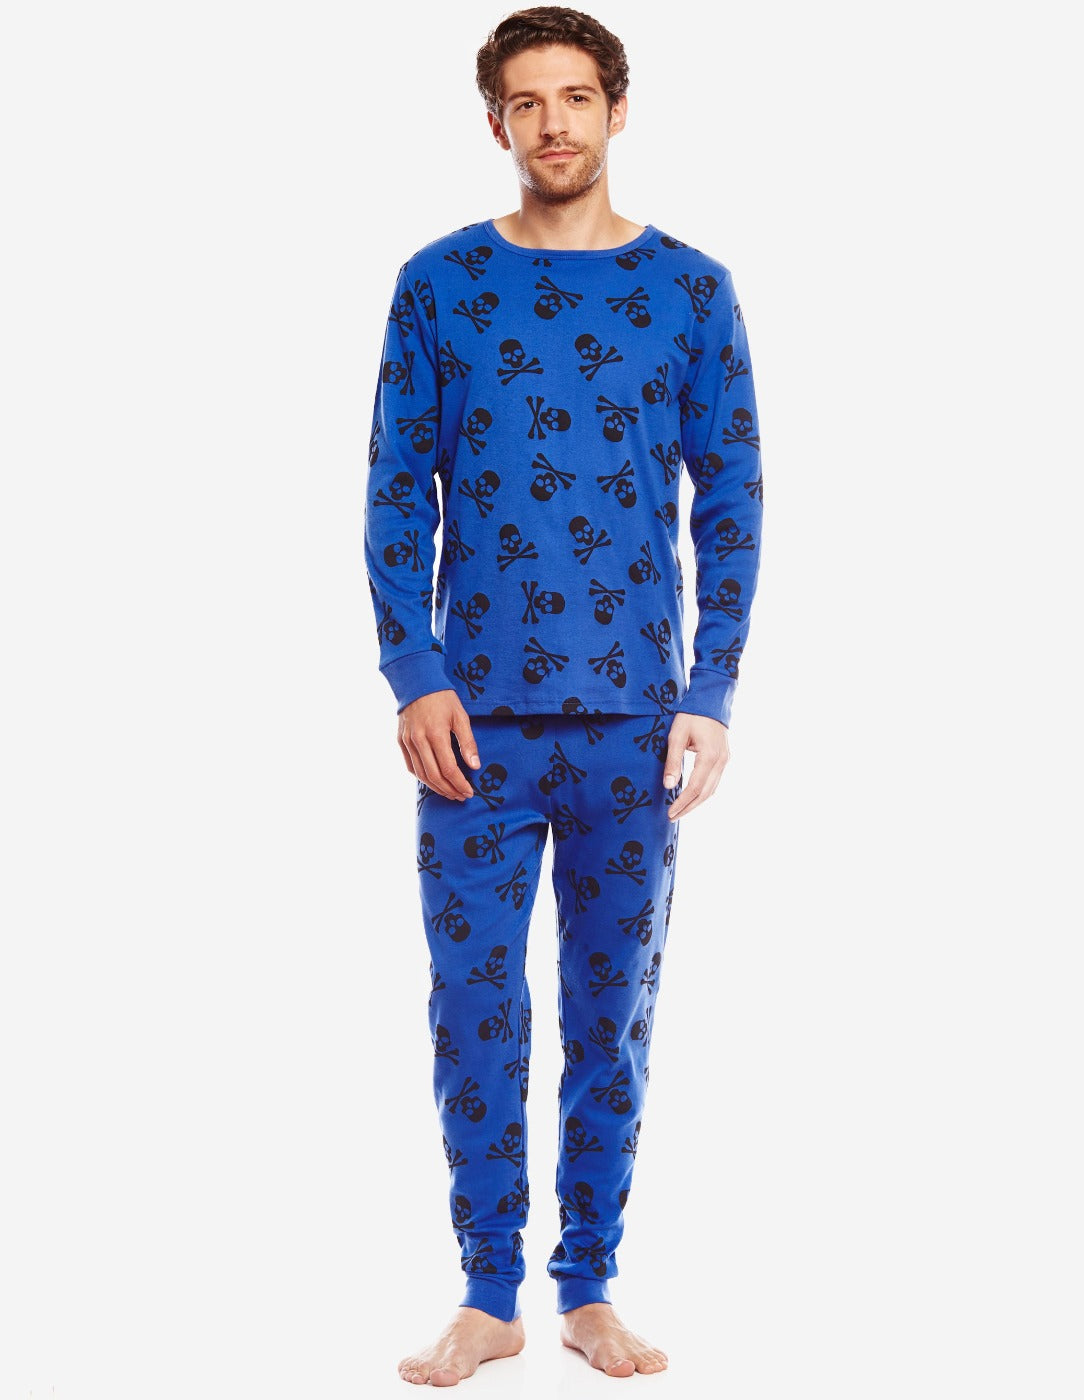 royal blue skull men's pajamas